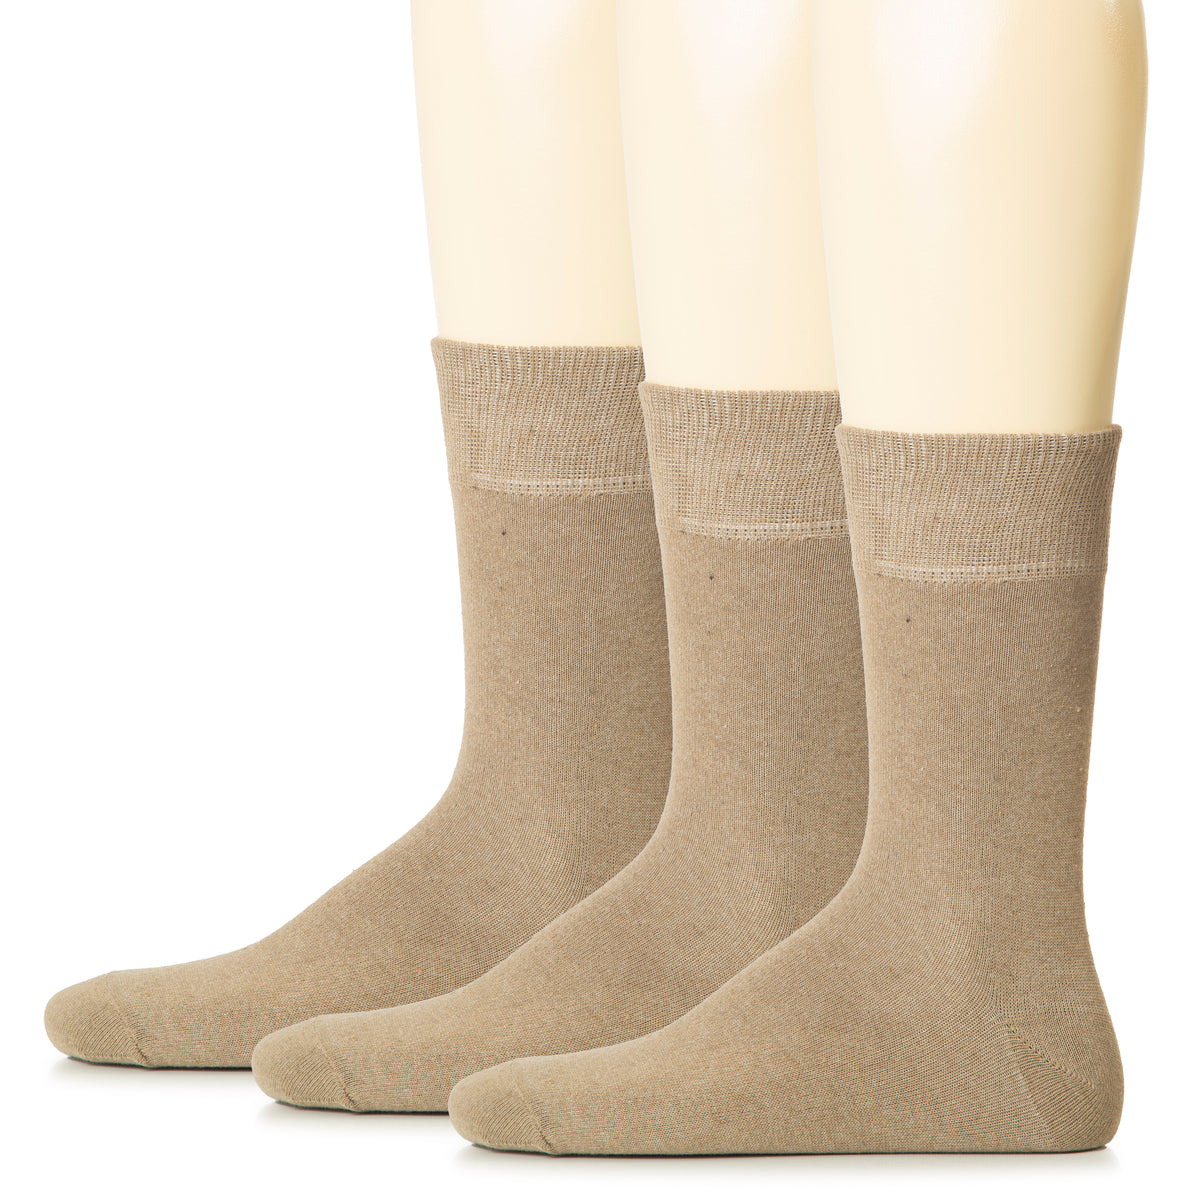 Hugh Ugoli Men Cotton Dress Socks XL / L / M / S Sizes, 3 Pairs | Shoe Size: 6-8 | Dark Brown